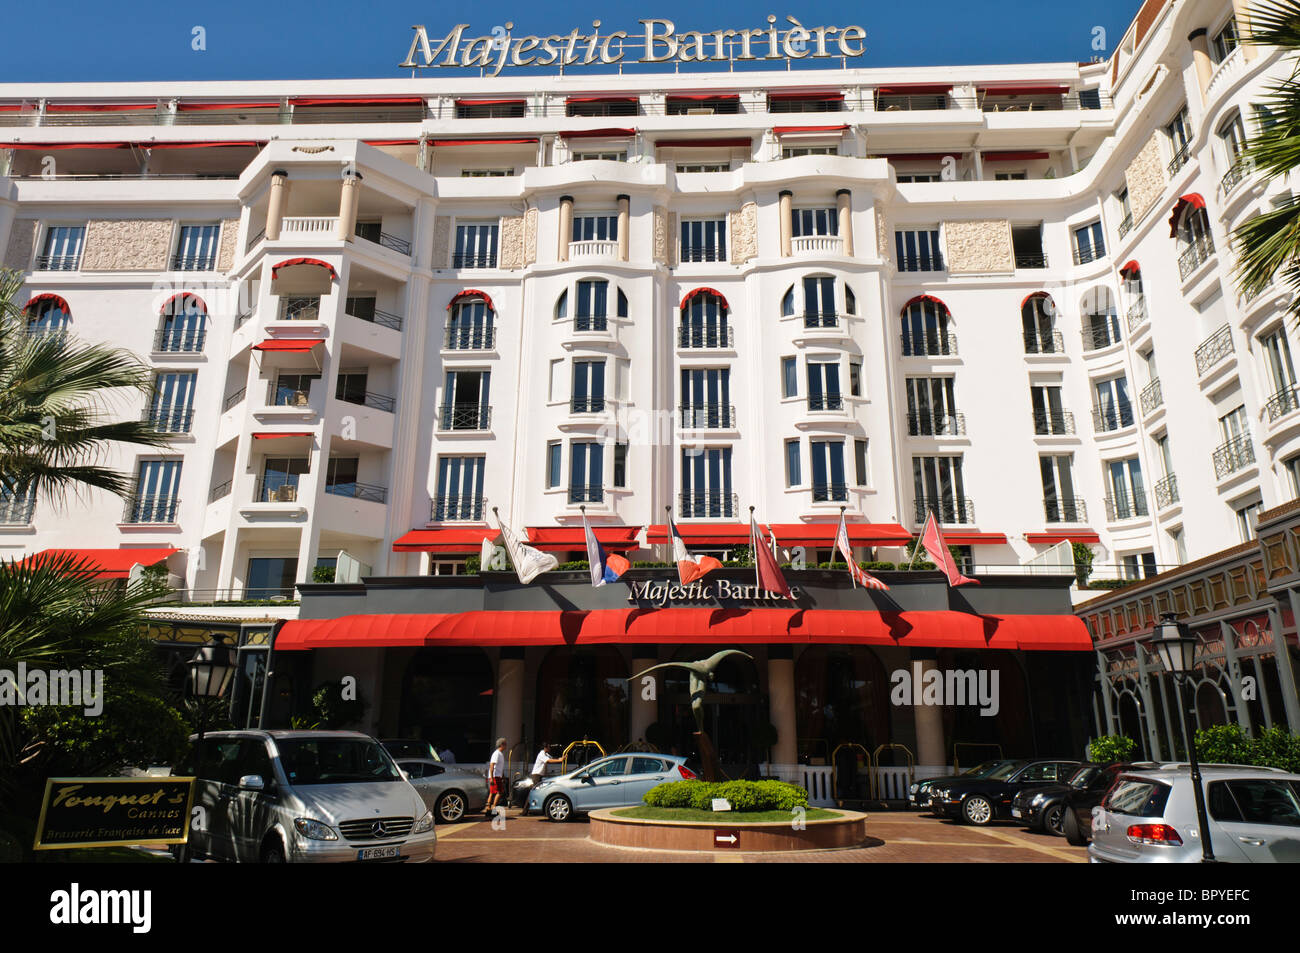 Hôtel Majestic Barrière, Cannes Photo Stock - Alamy